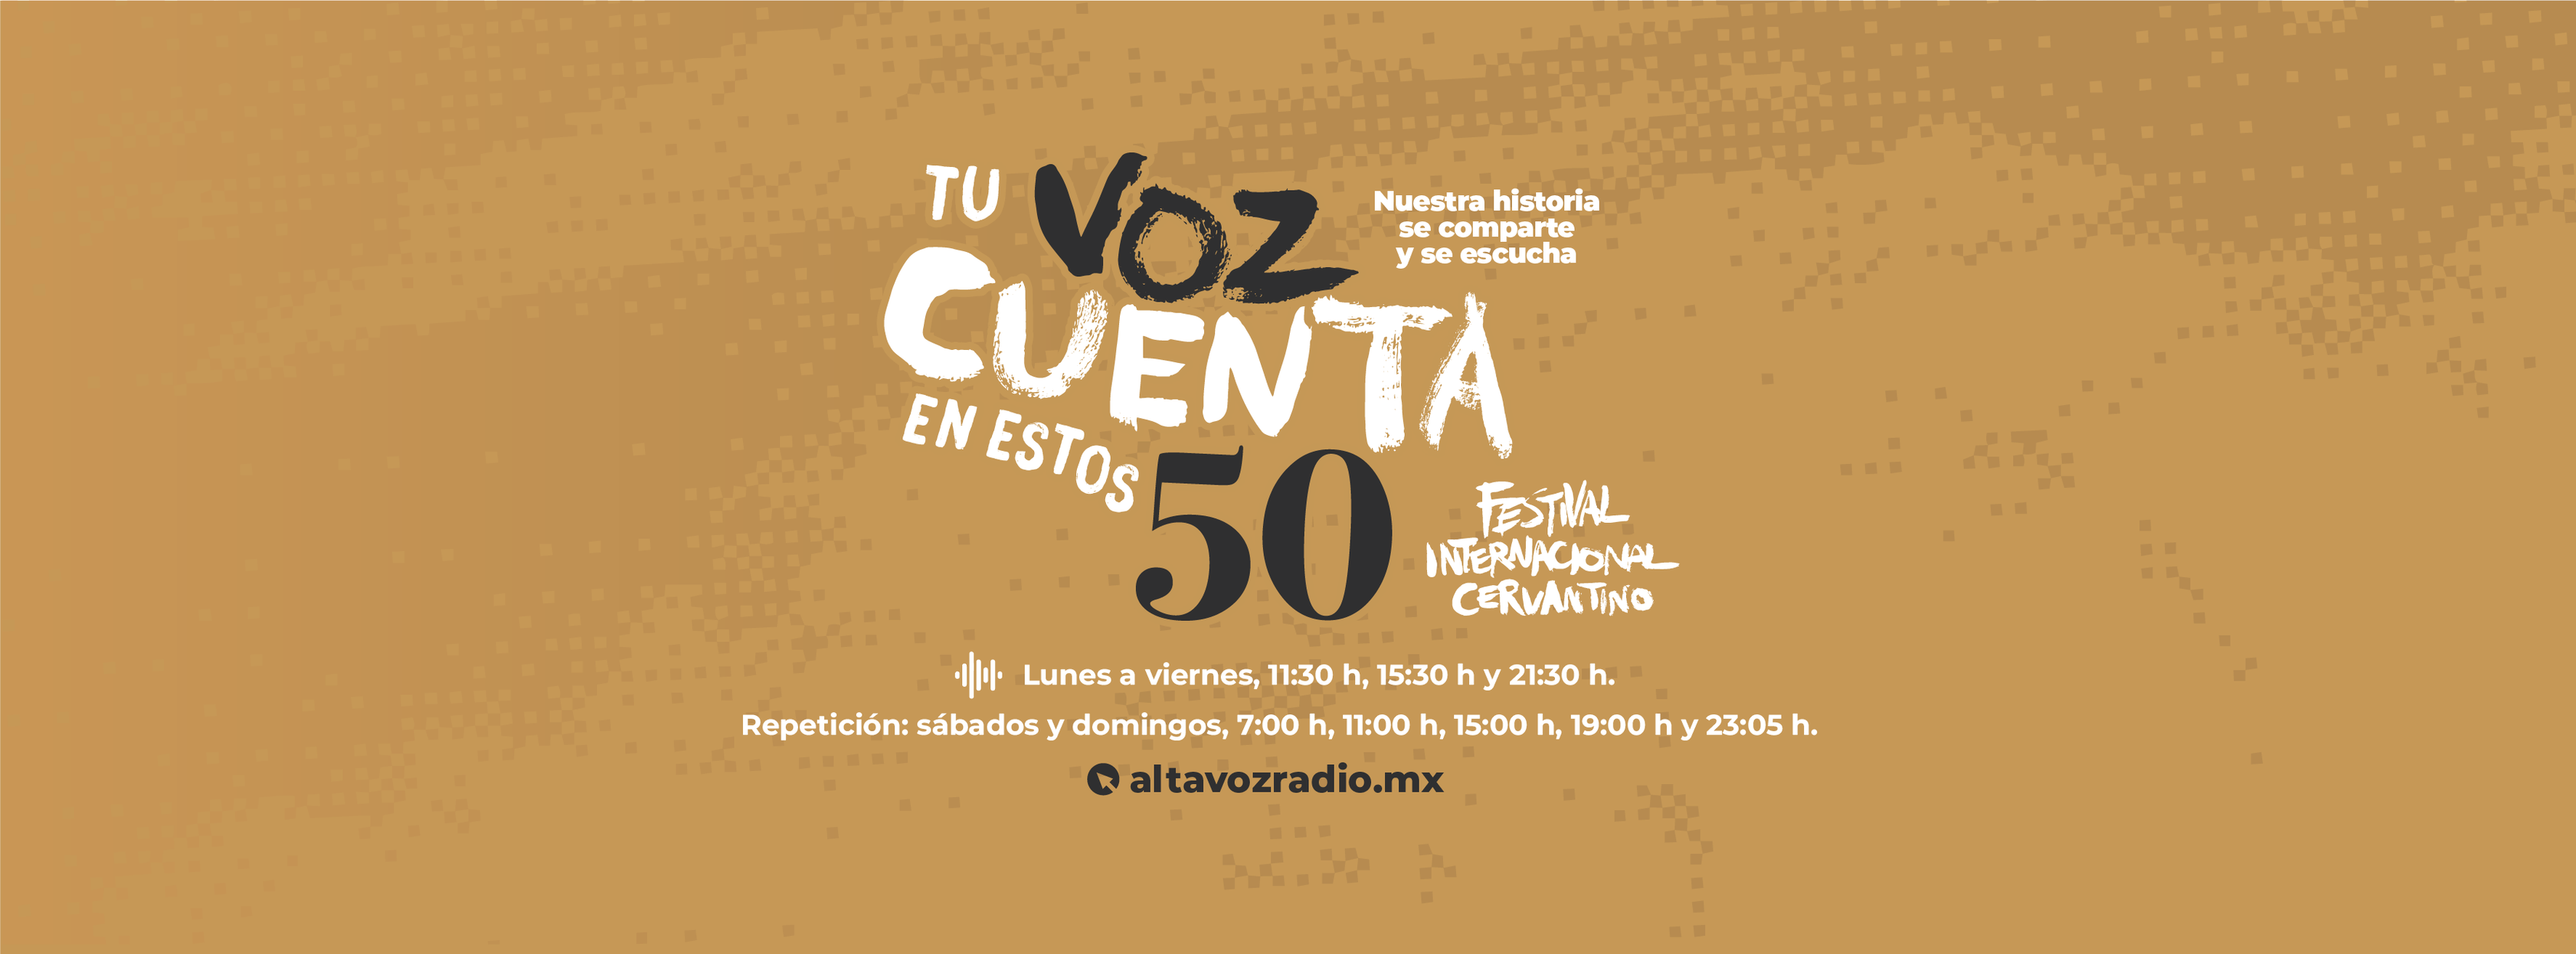 Revelan programa del Festival Internacional Cervantino en CDMX